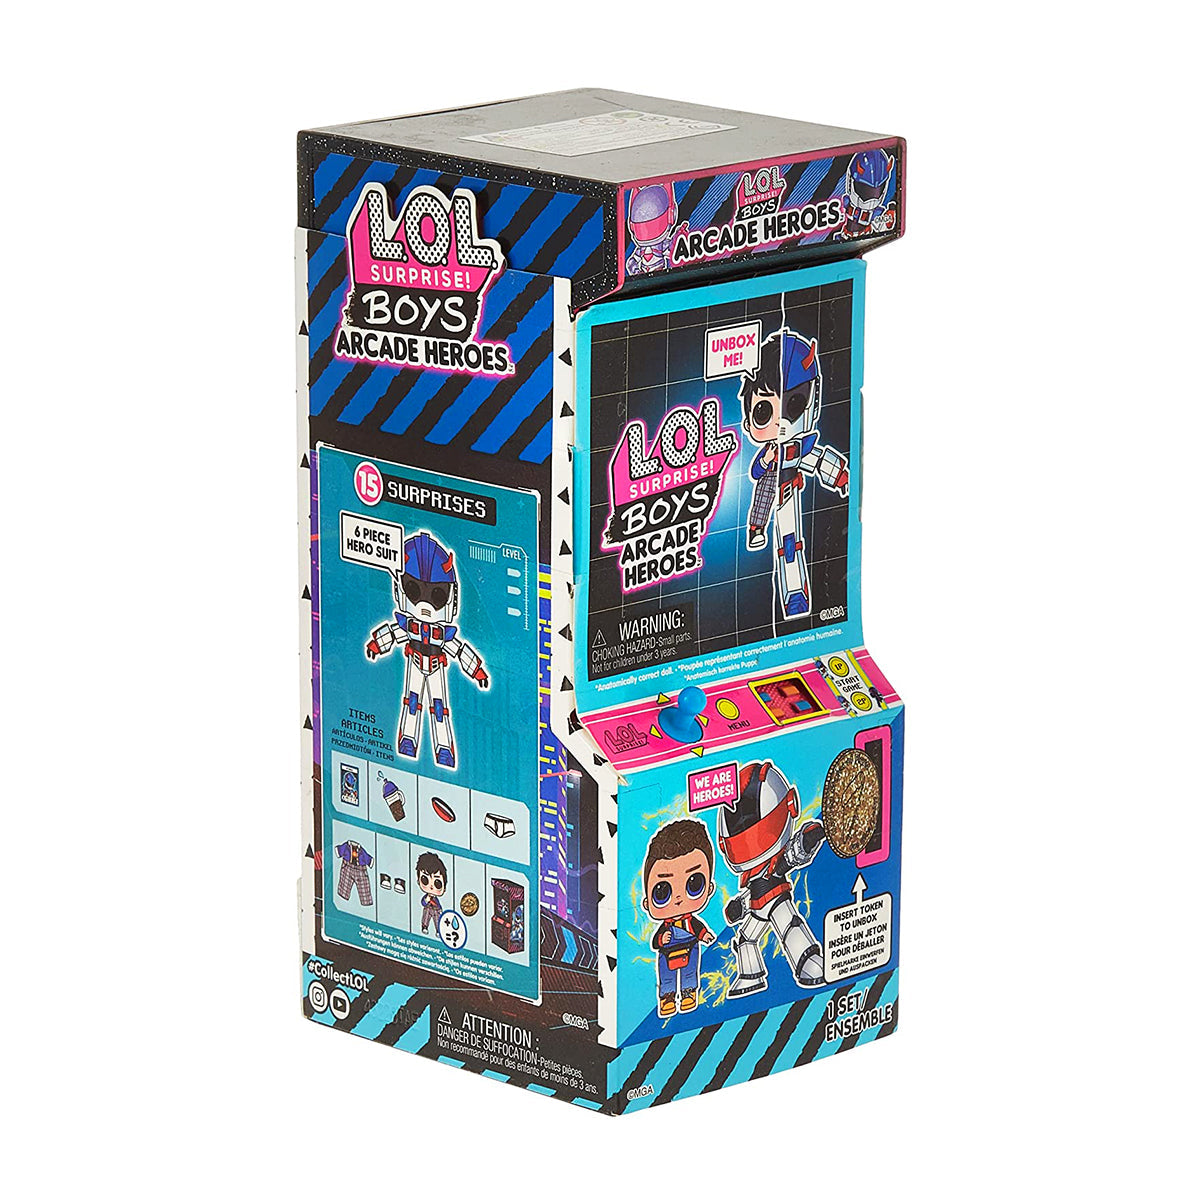 L.O.L. Surprise Boys Arcade Heroes Action Figure Doll